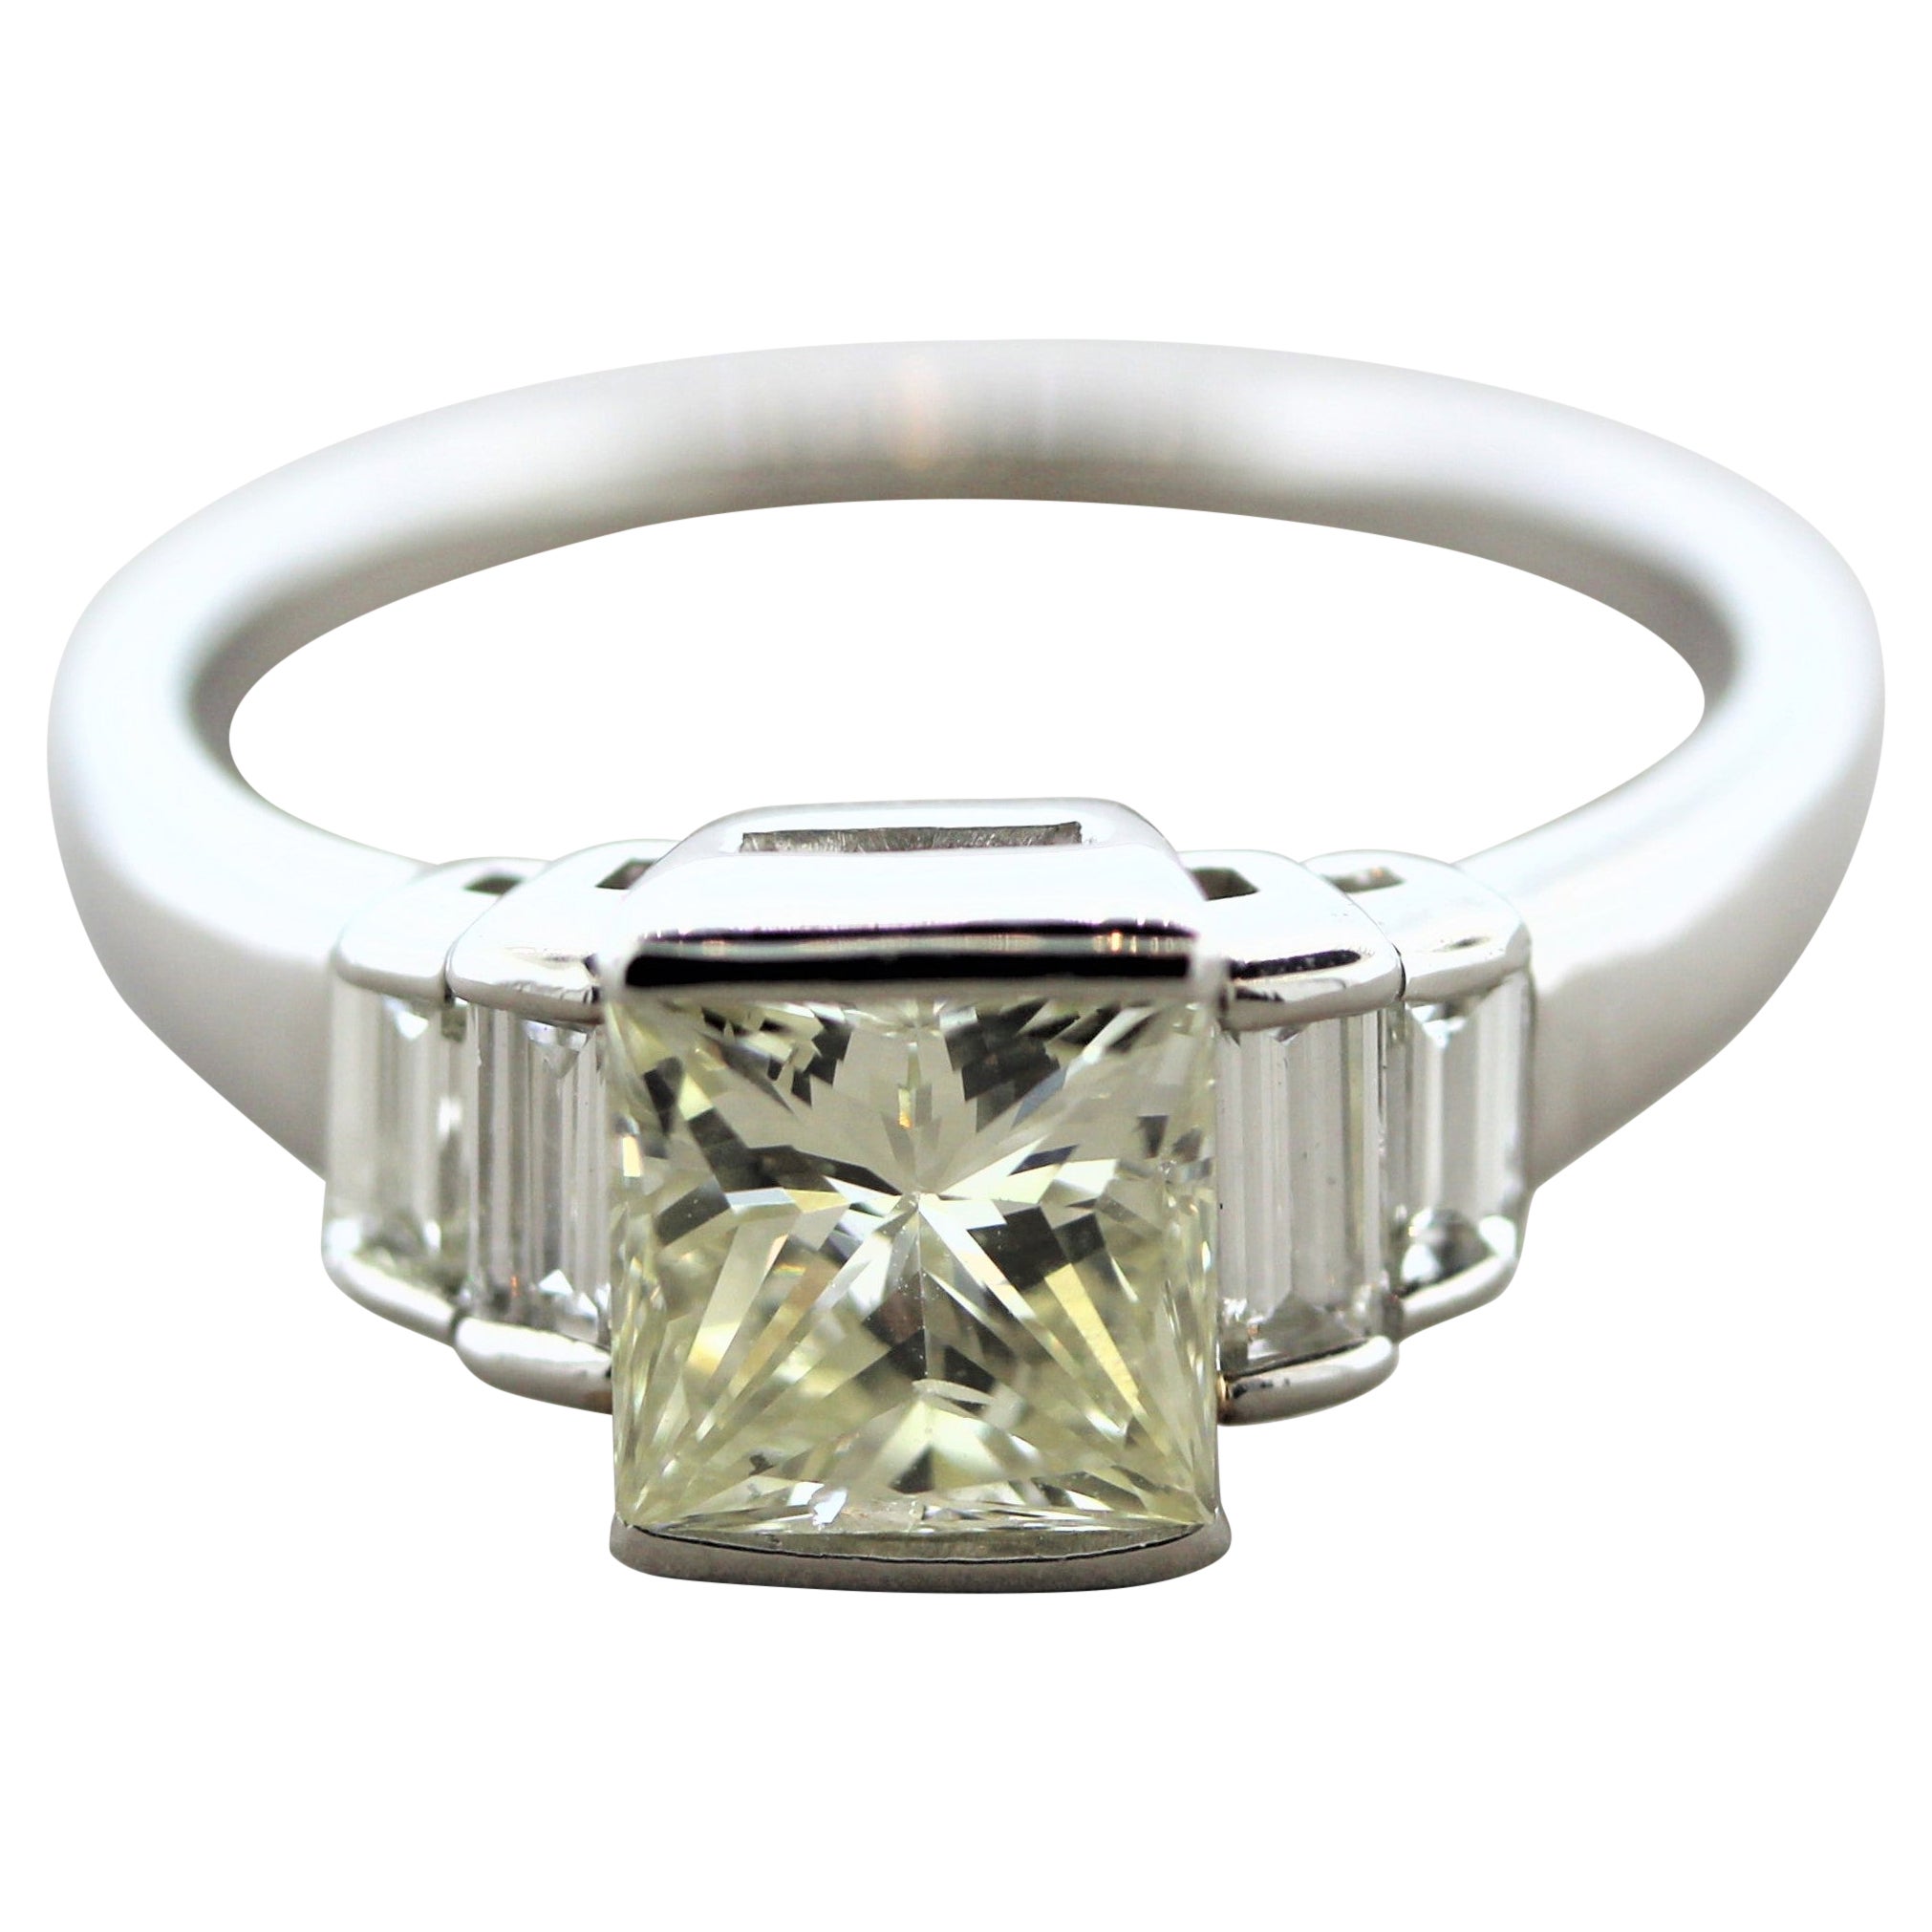 What is a fancy light yellow diamond?